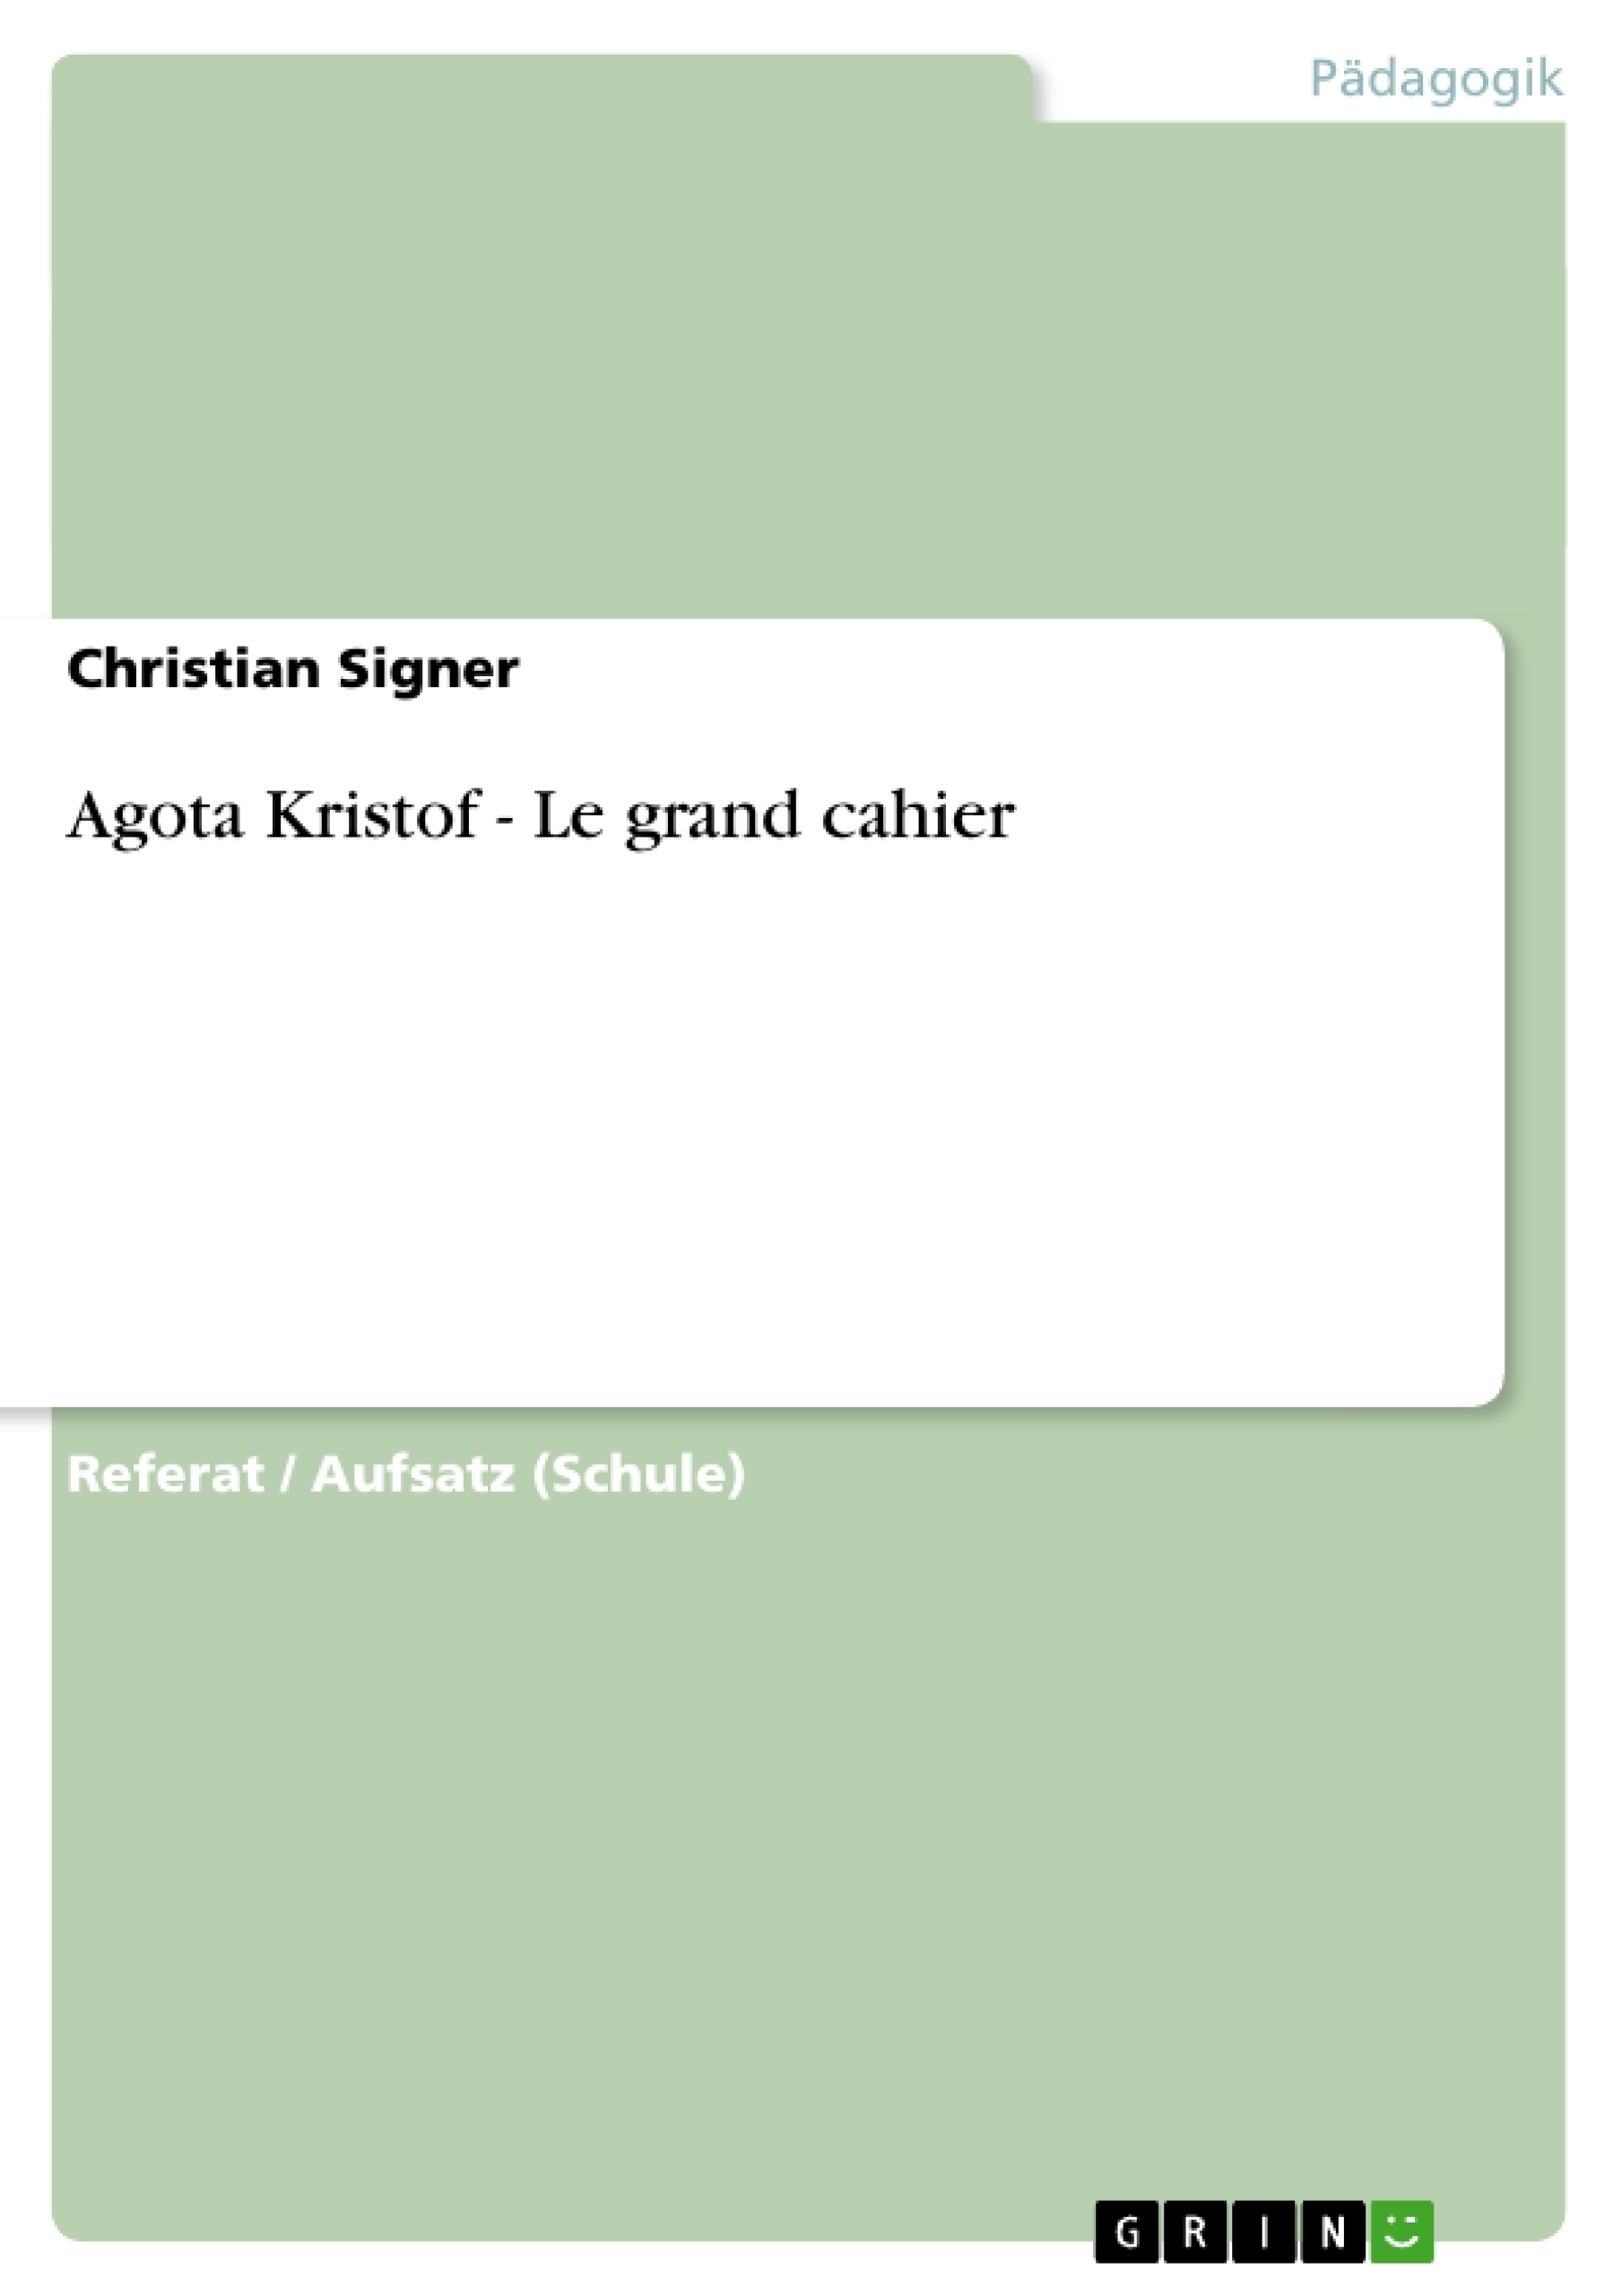 KRISTOF, AGOTA. Grand Cahier (Le)